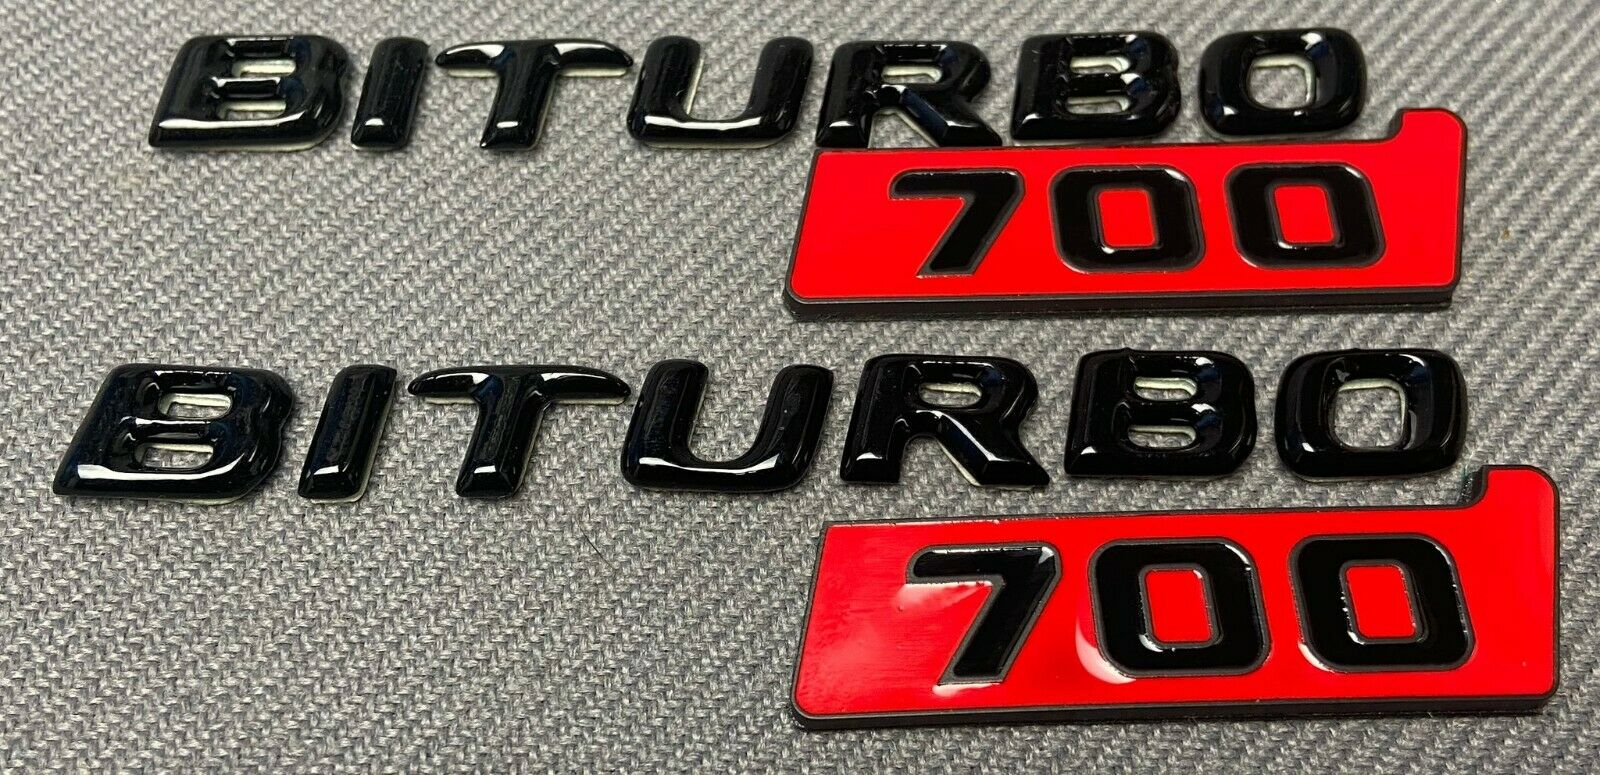 Biturbo 700 Metallic Emblem Logo Badges 16 pcs Set for Mercedes W463 W463A G-Wagon